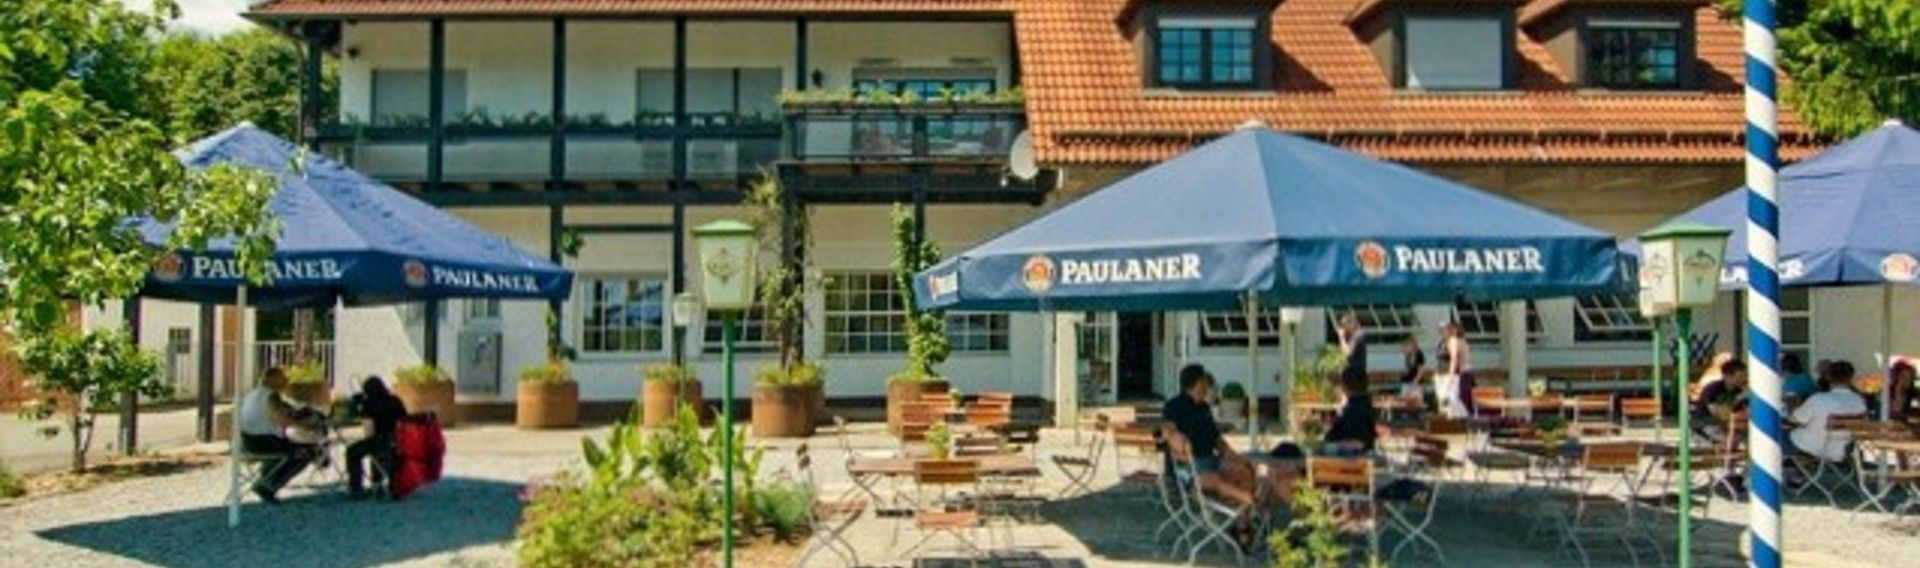 Ulmbachtalsperre Restaurant